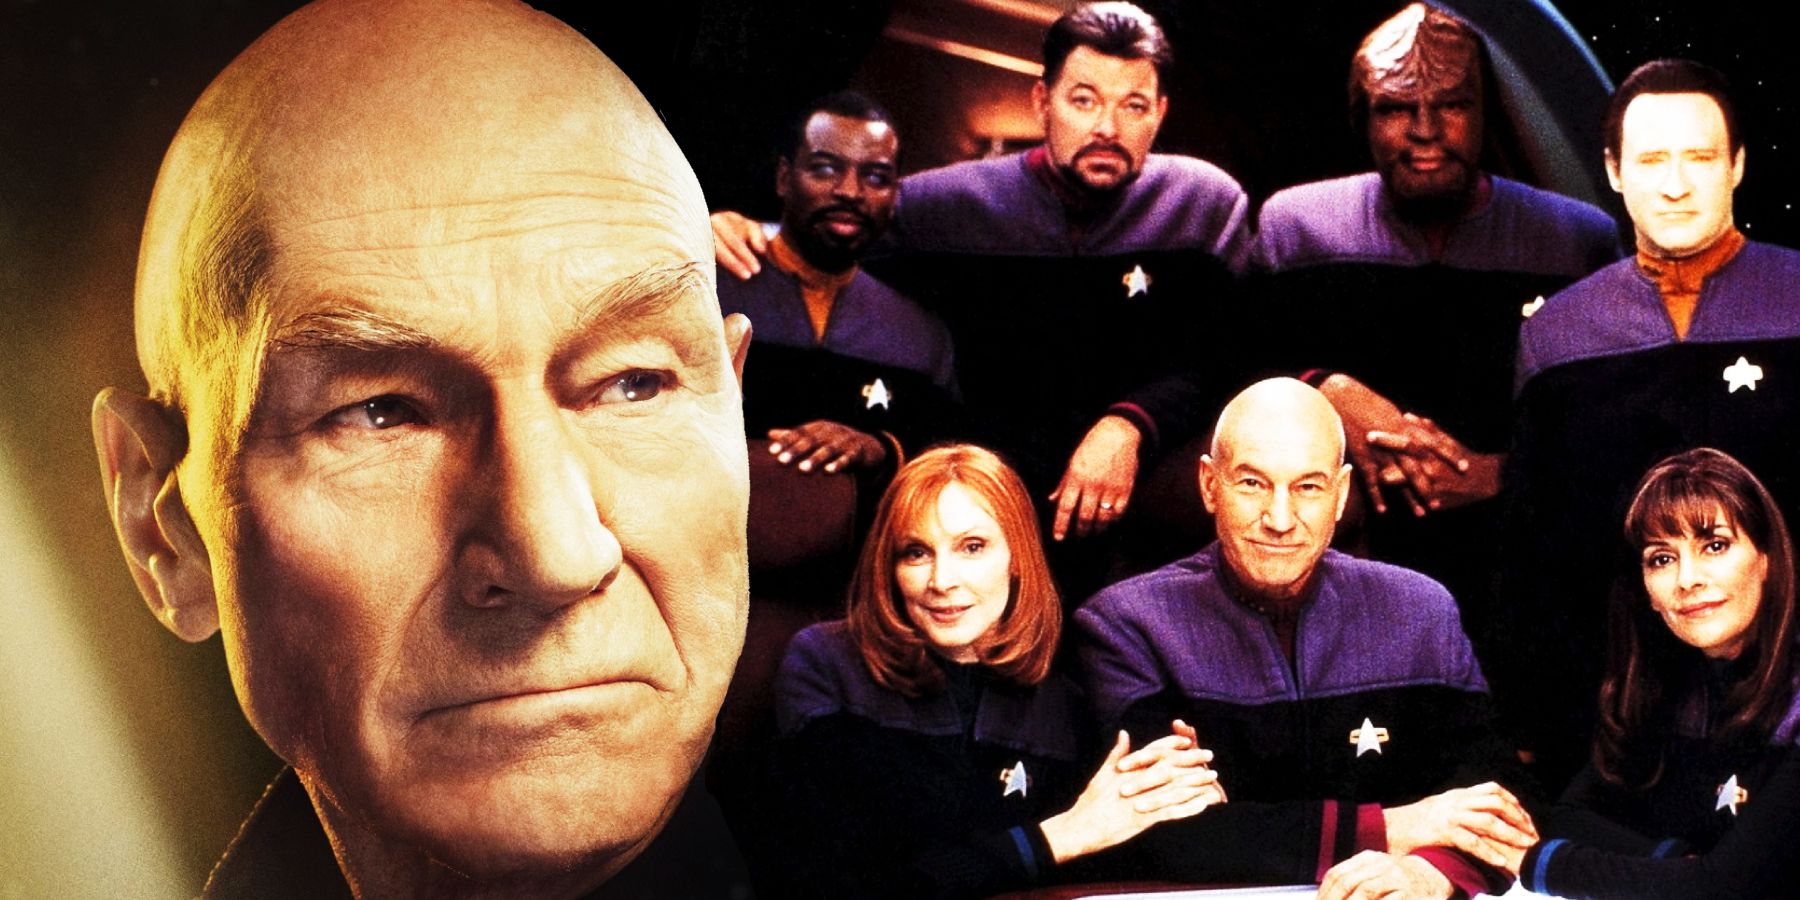 Picard season 3 to reunite the TNG cast after Star Trek: Nemesis failed them